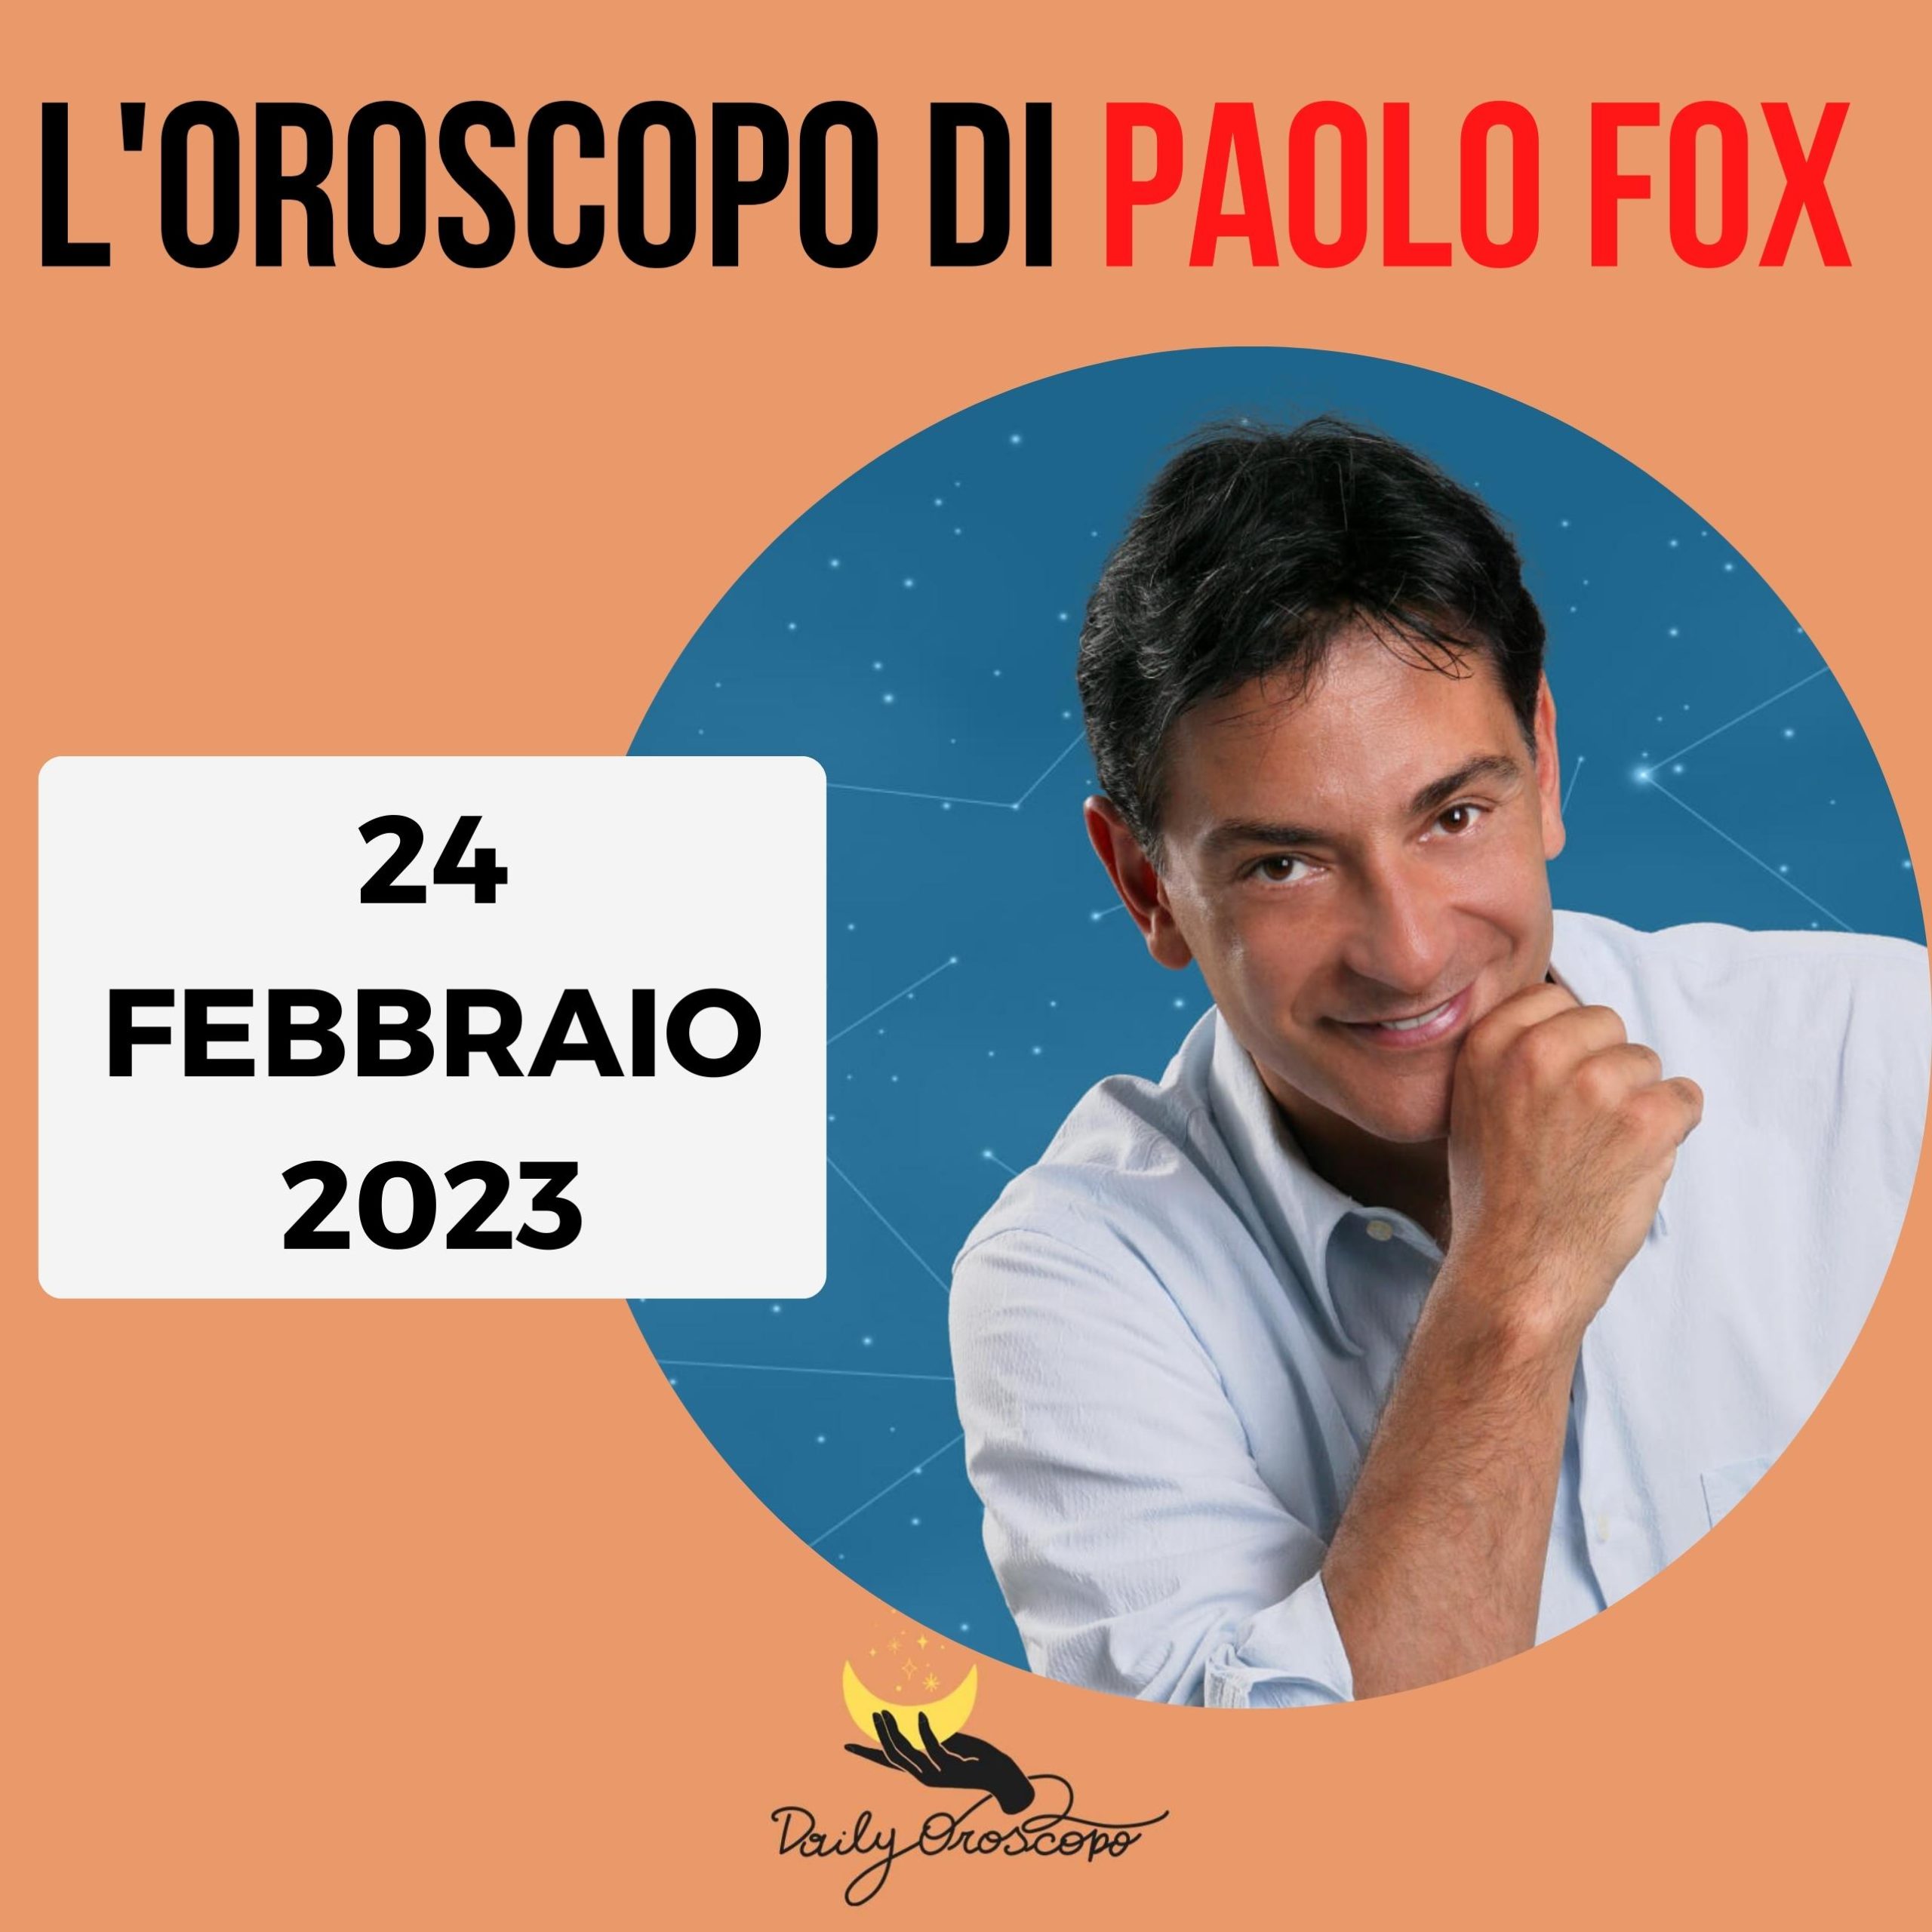 Oroscopo Paolo Fox oggi 24 febbraio 2023